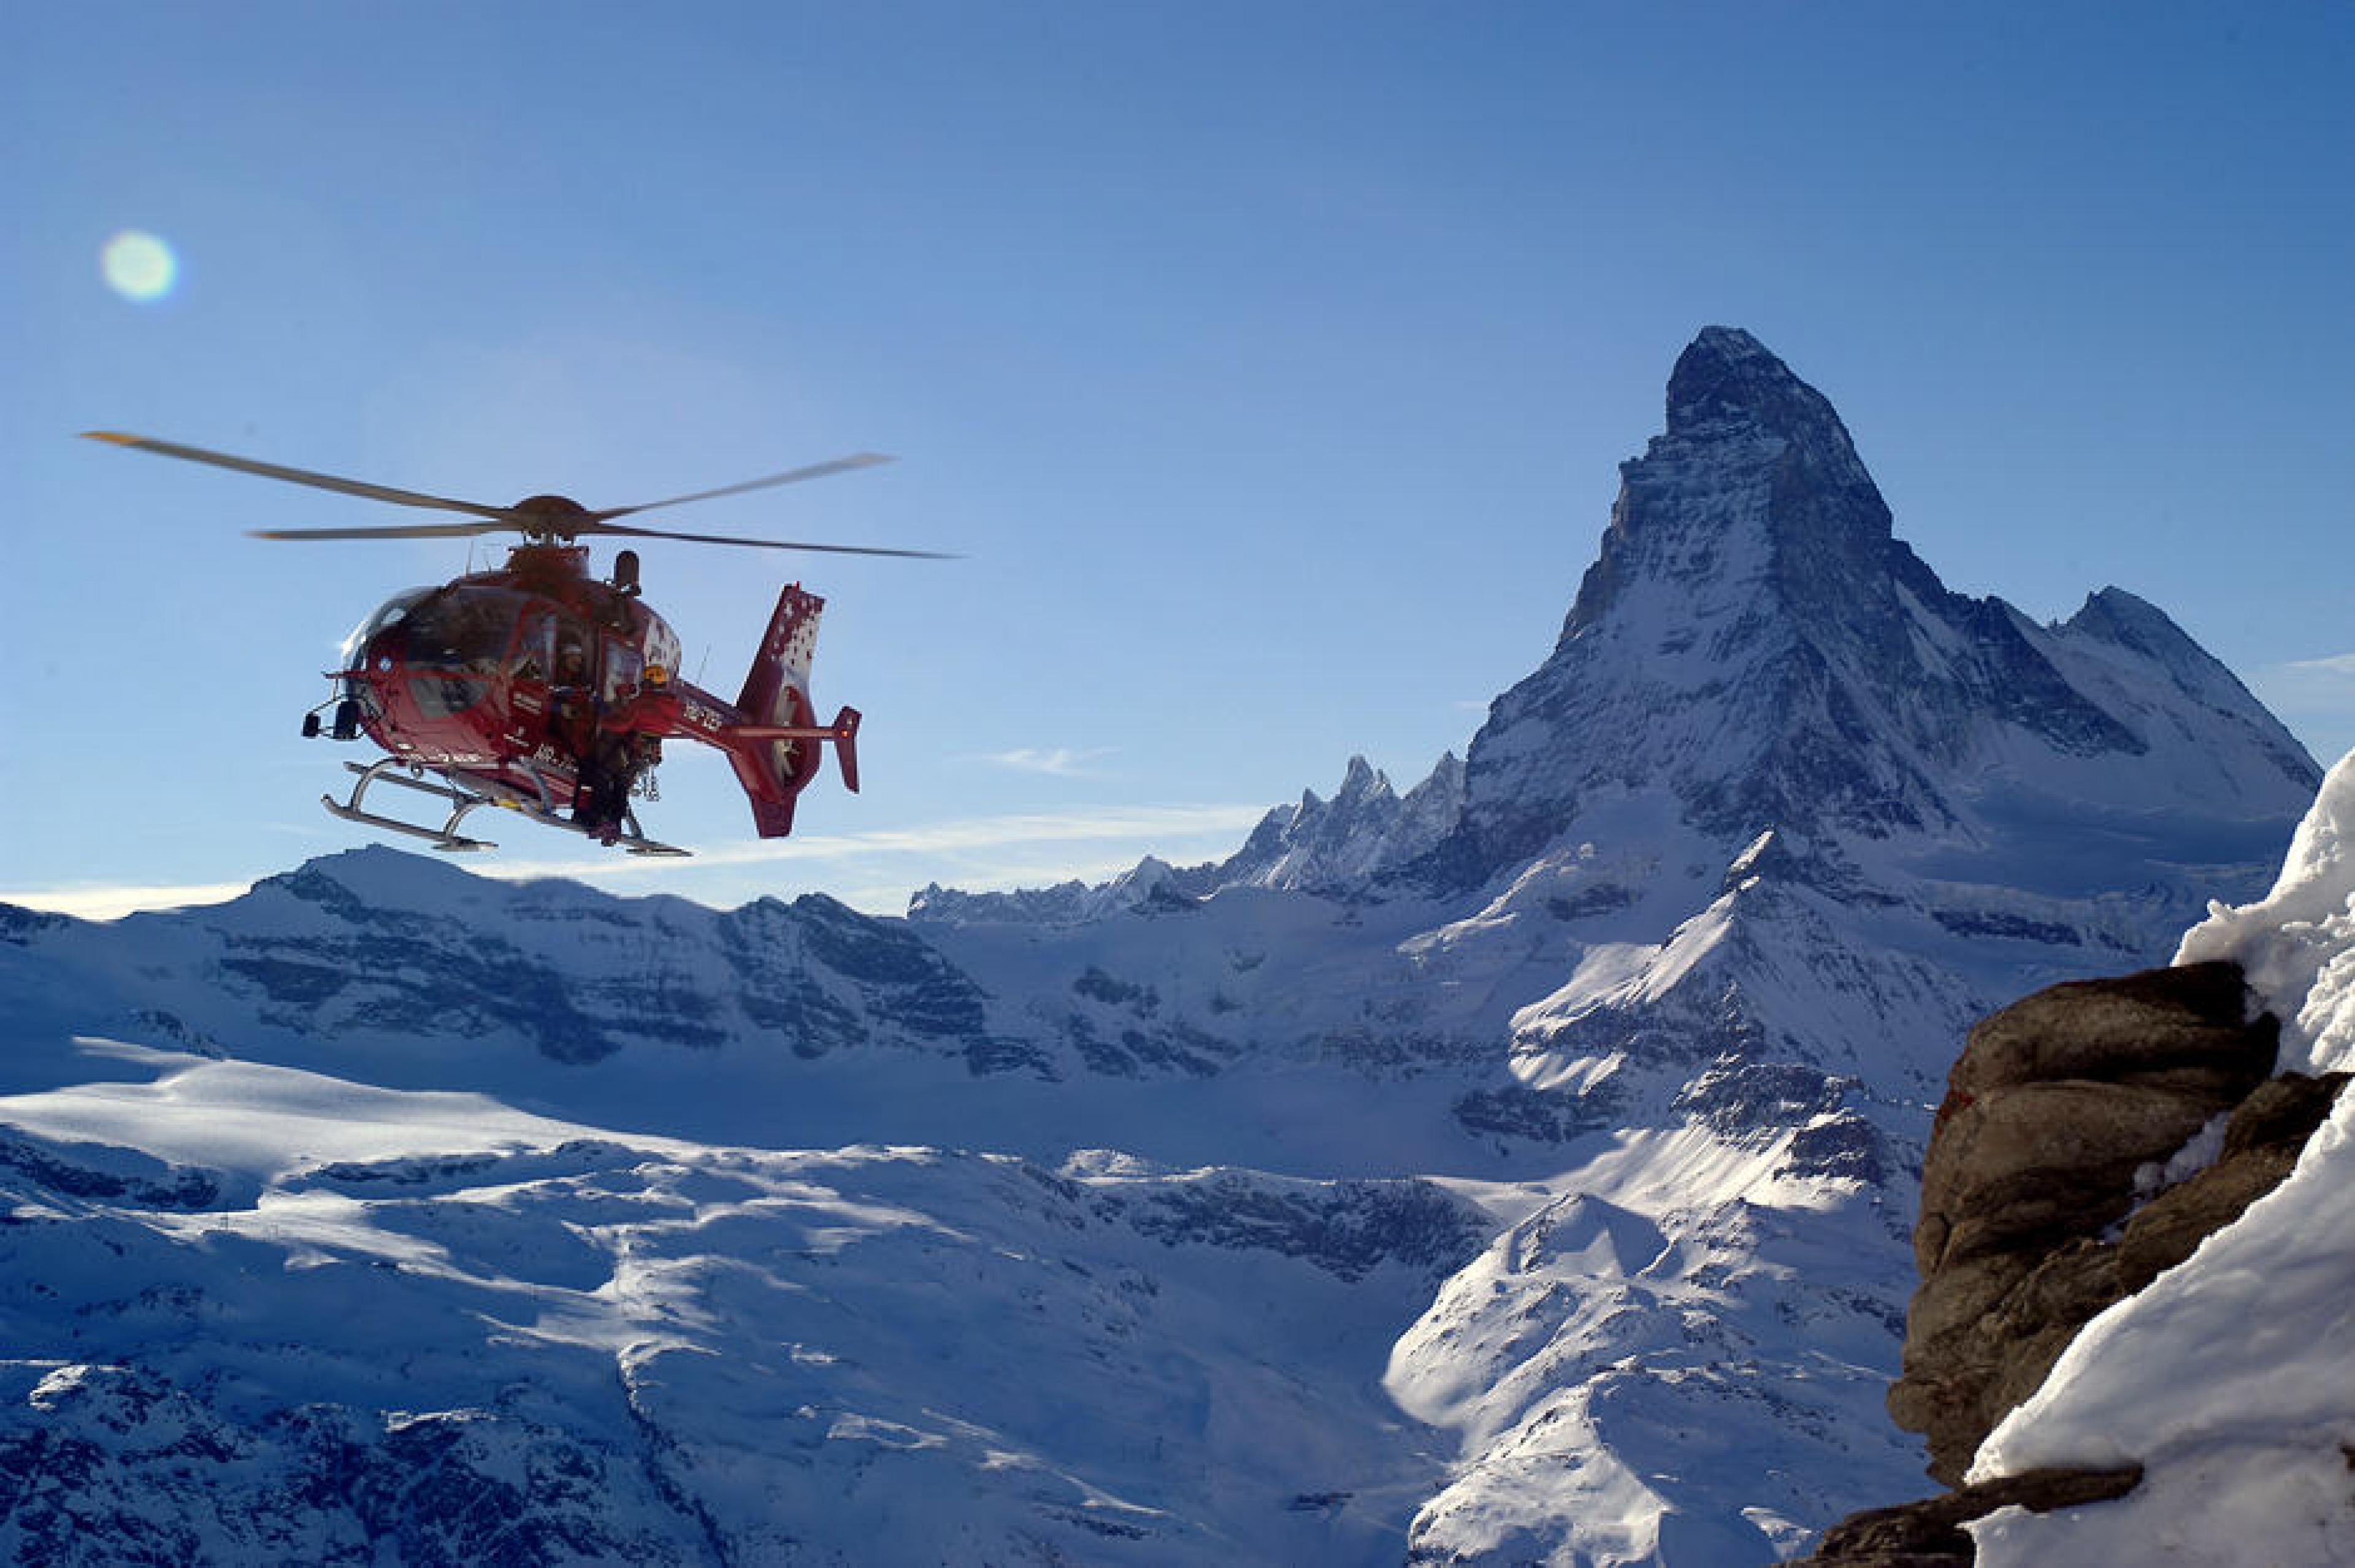 Aerial View - Helicopter Trips/Heli-skiing, Zermatt, Switzerland - Courtesy of Air Zermatt